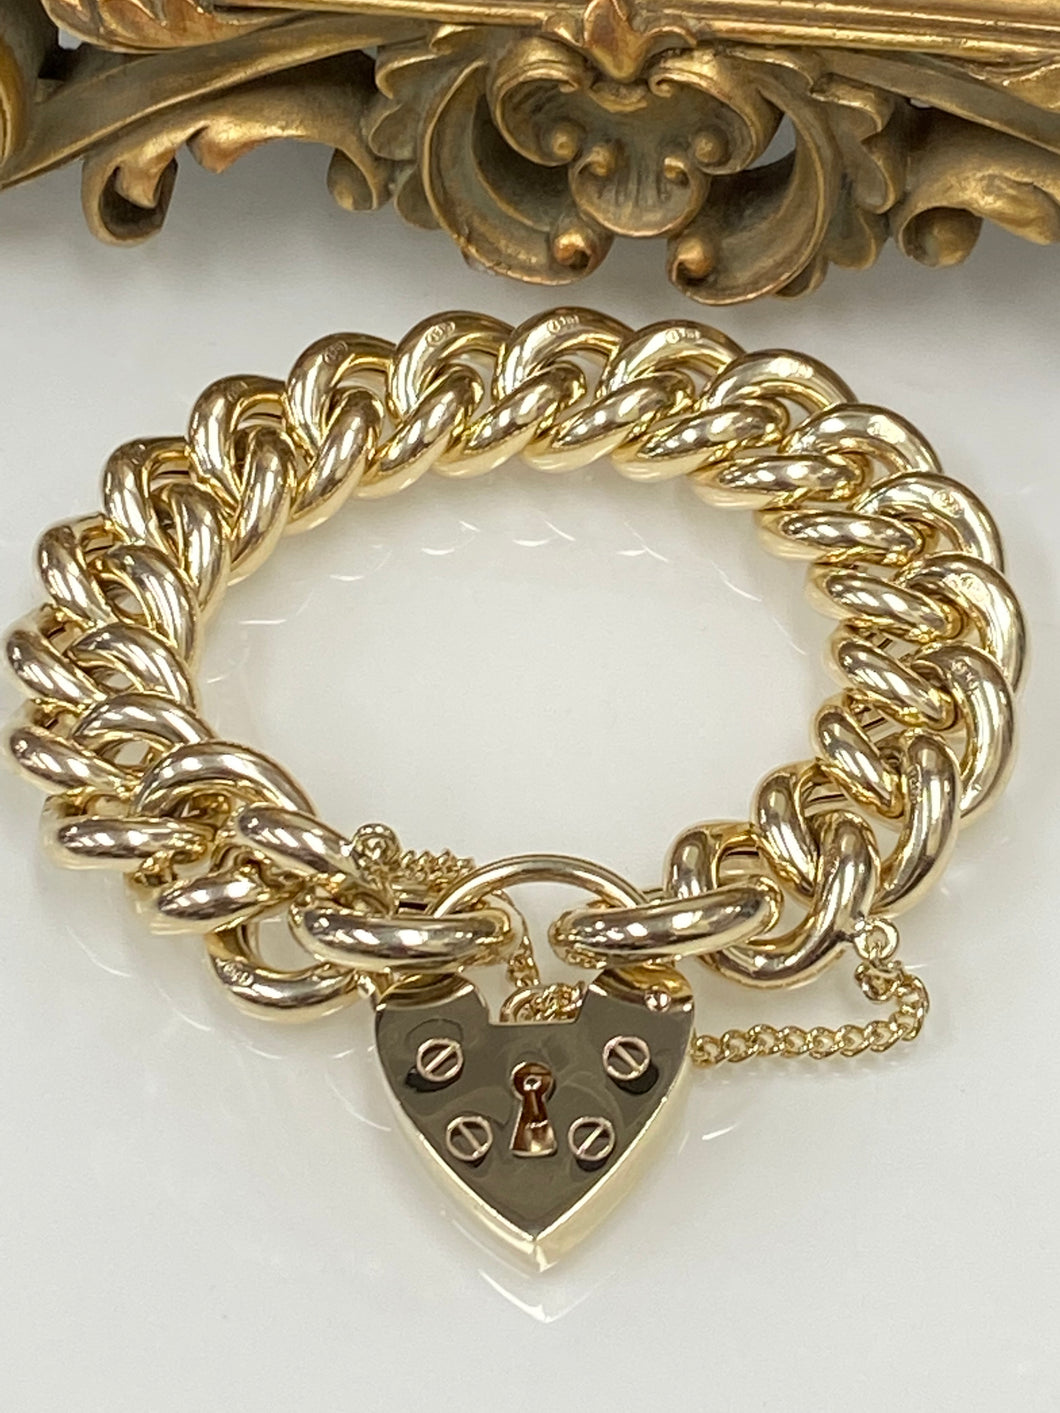 9ct Y/G Handmade Curb Link Bracelet with Padlock